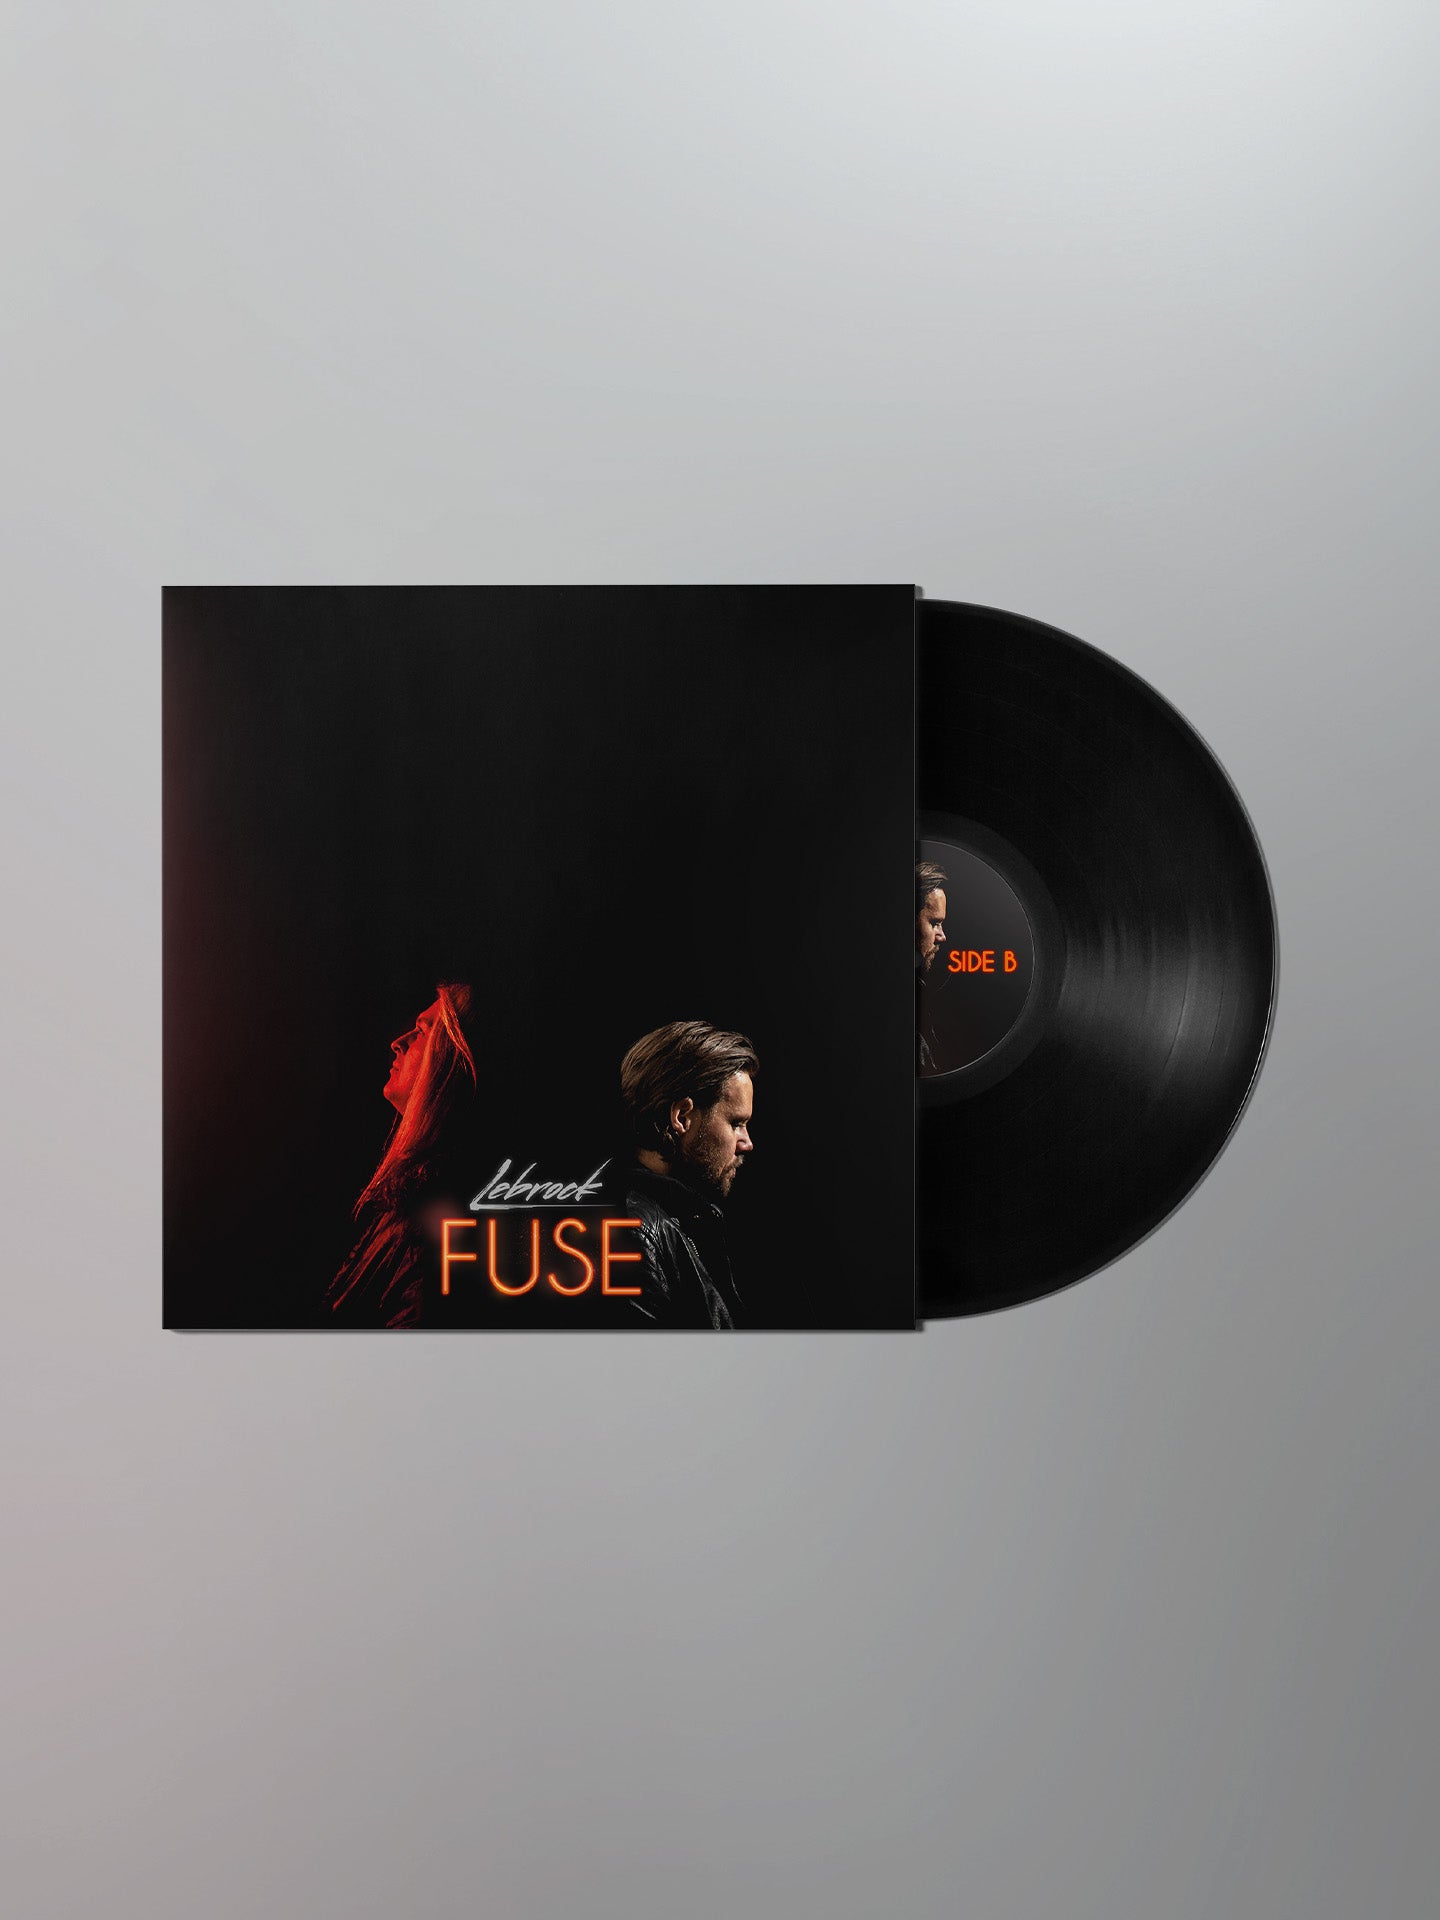 LeBrock - Fuse (Limited Edition Vinyl)